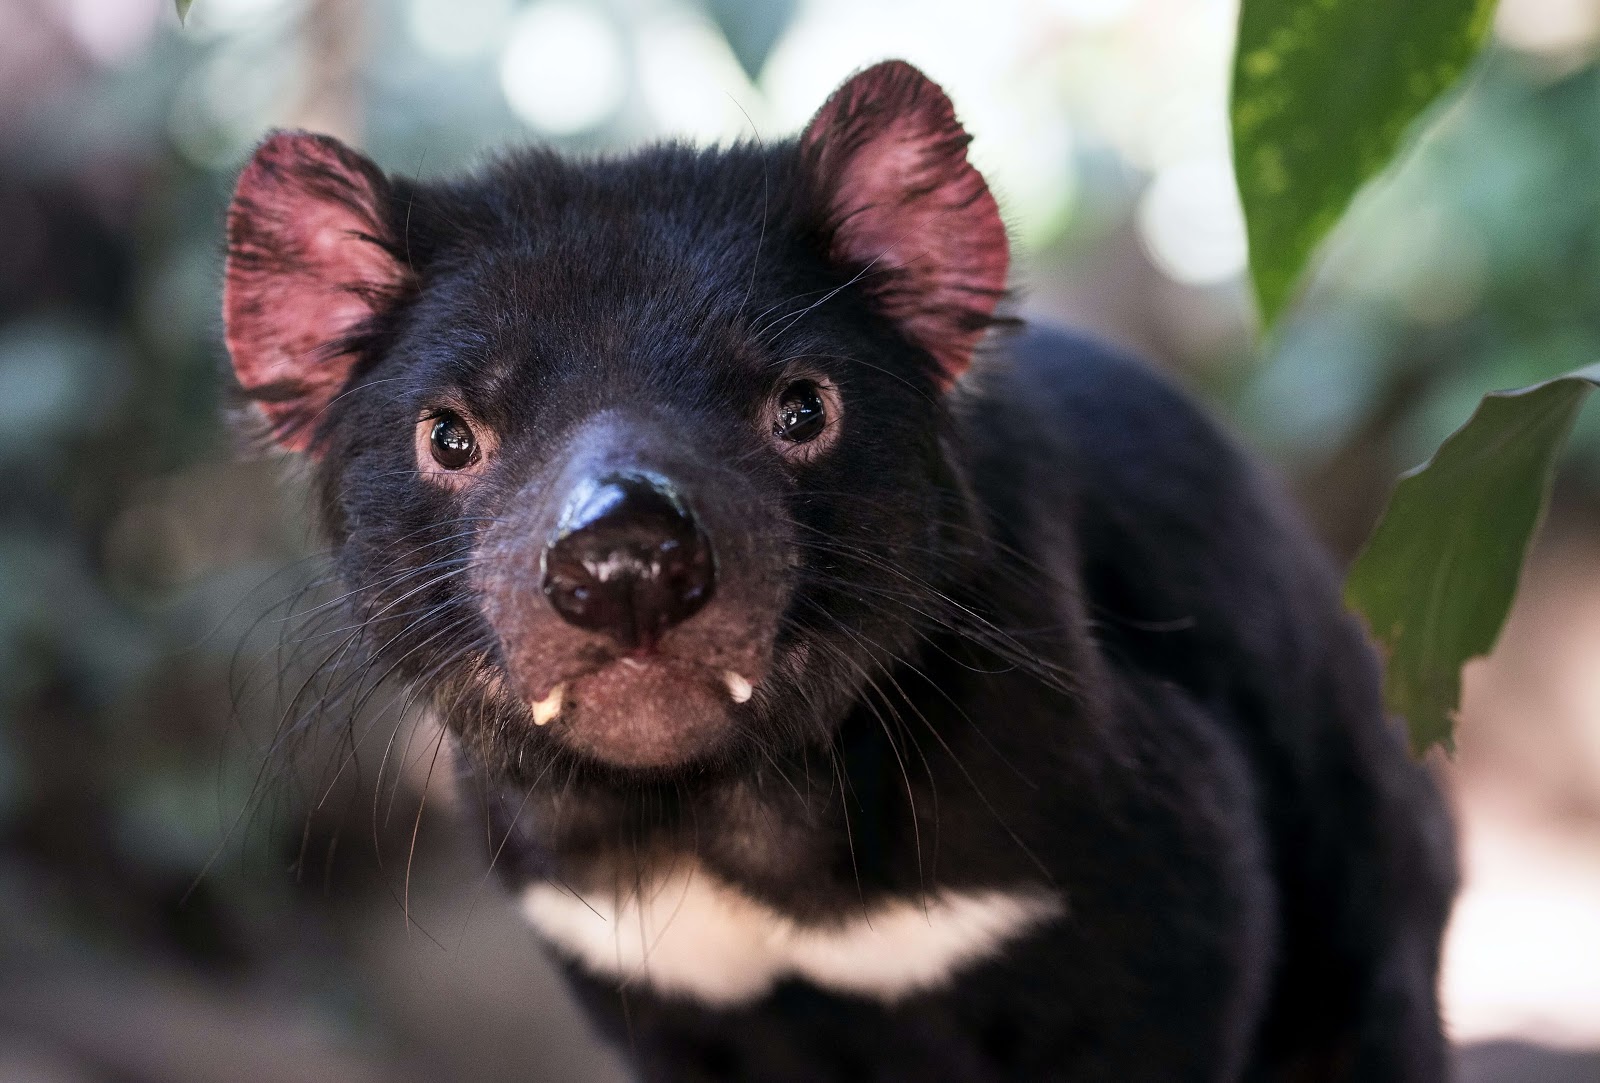 A Tasmanian devilpup